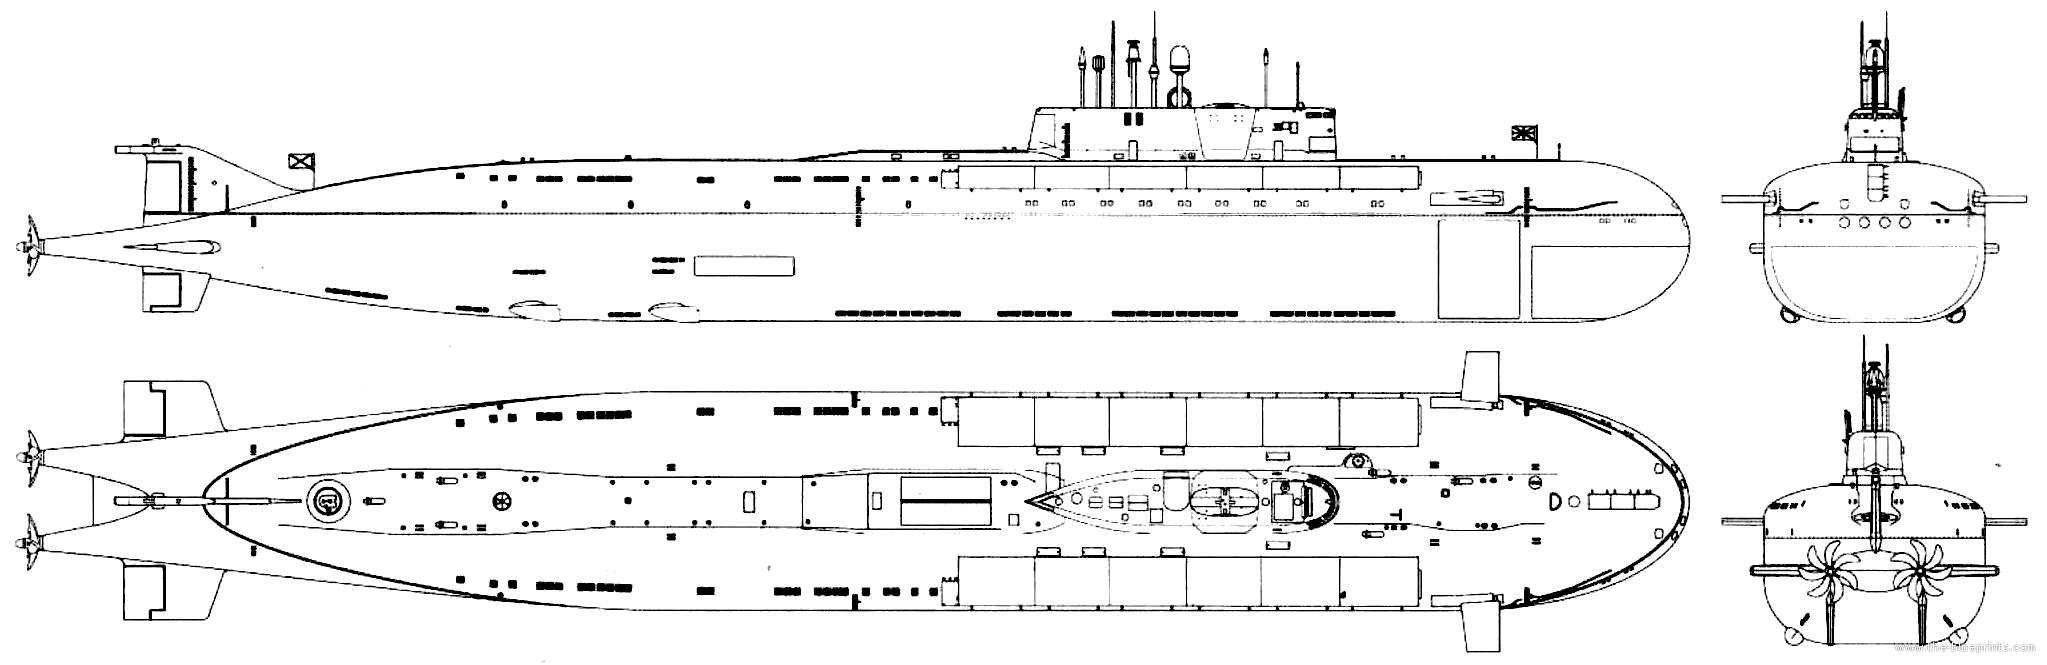 ussr-project-949a-antey-k-141-kursk-oscar-ii-class-submarine.png